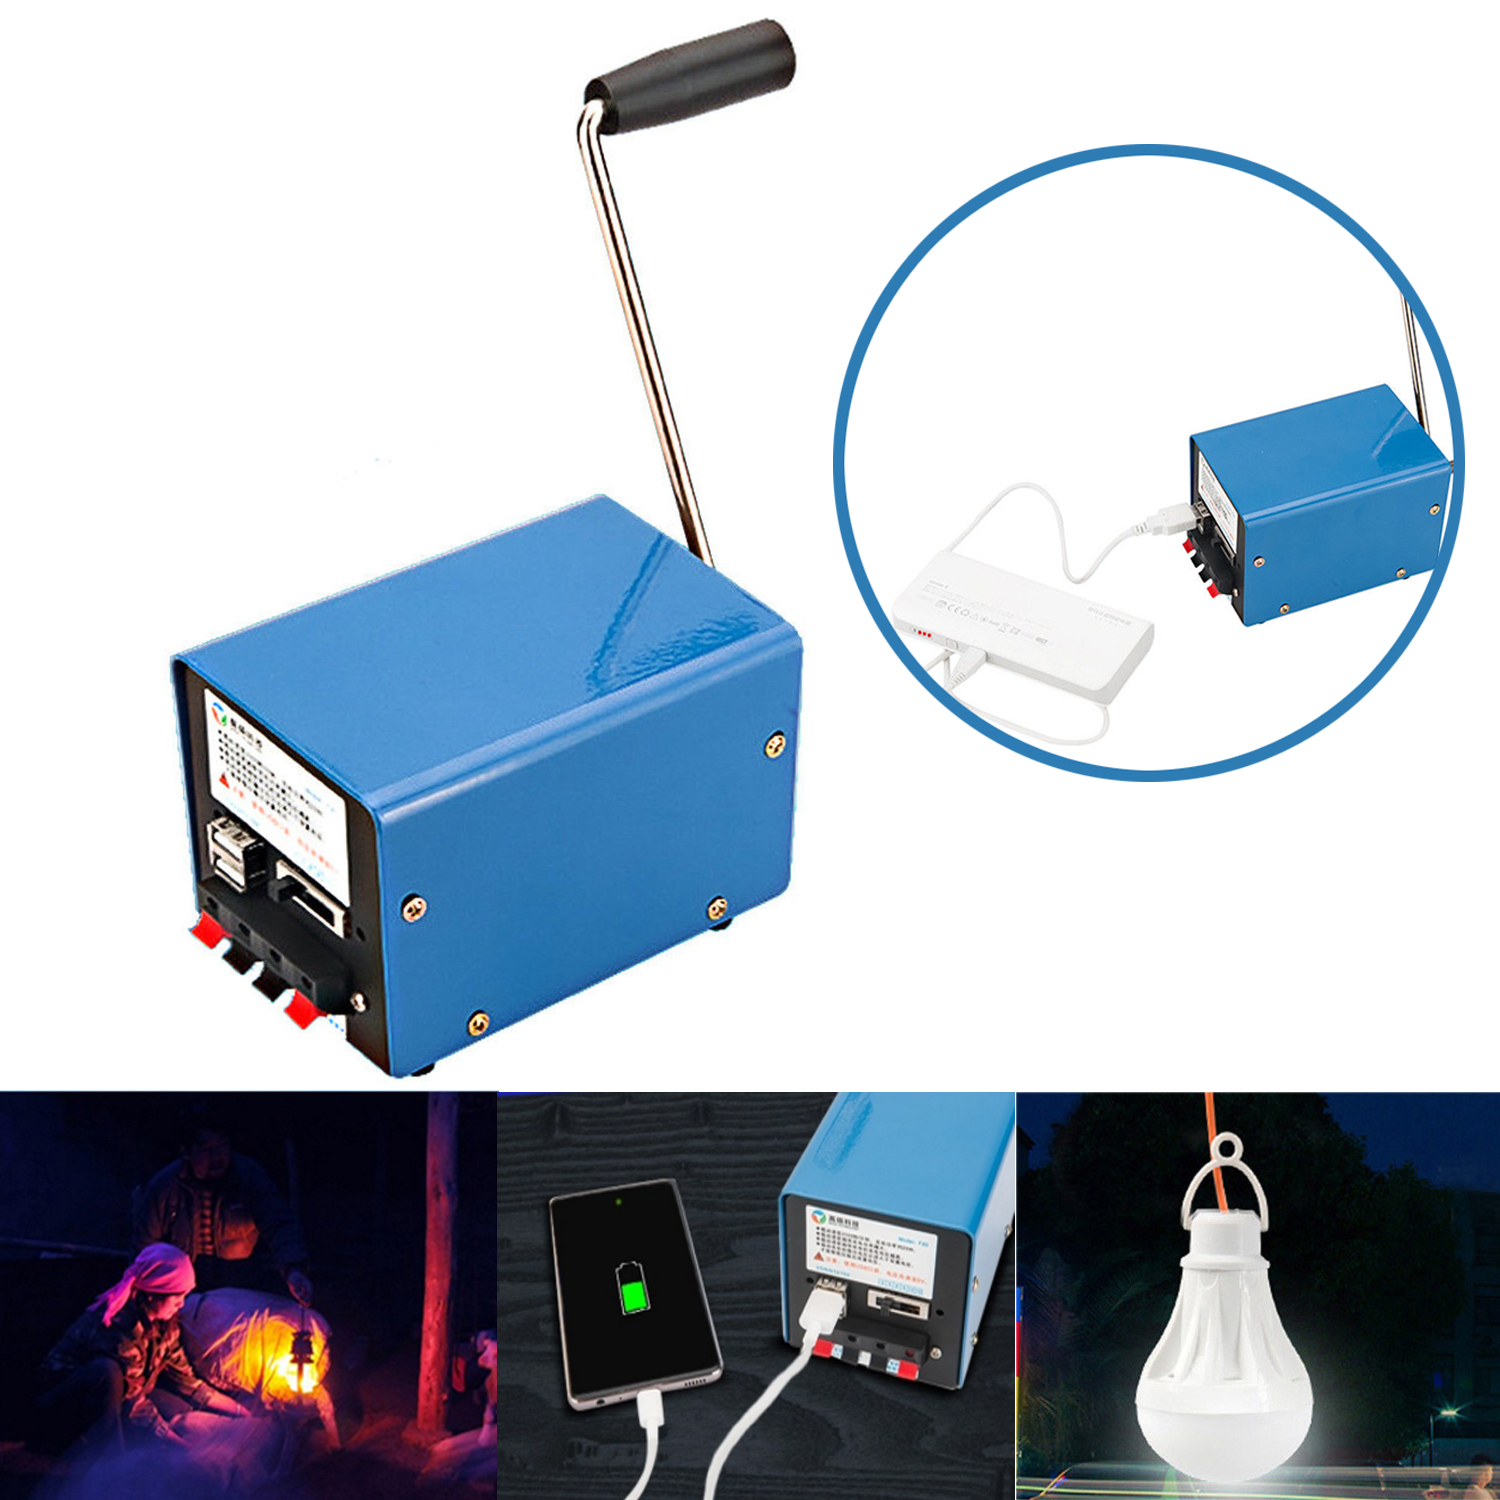 

IPRee® Outdoor 20W Manual Hand Crank Generator DIY USB Electric Dynamo Power Emergency Phone Charger